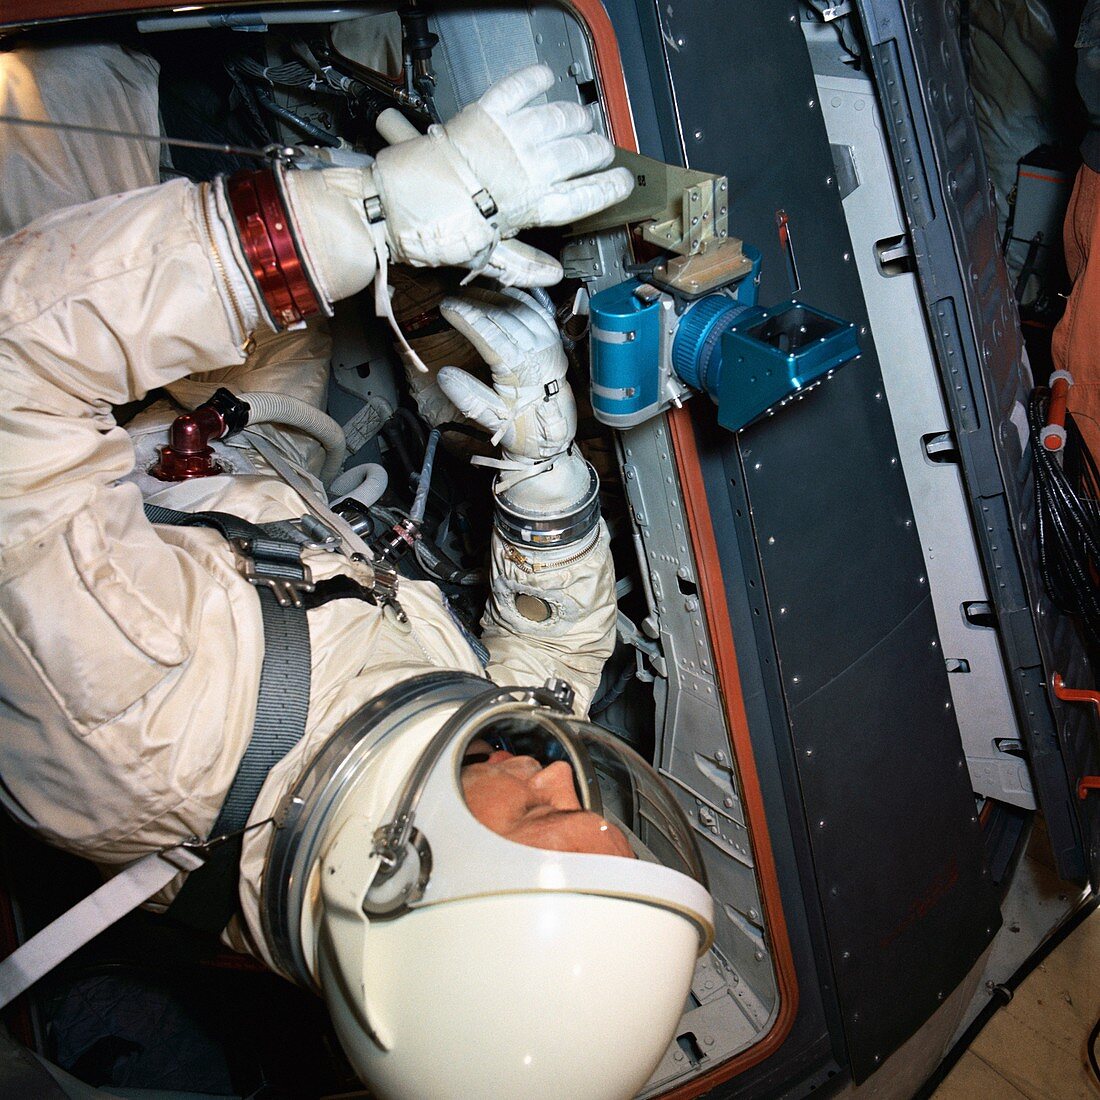 Michael Collins,US astronaut